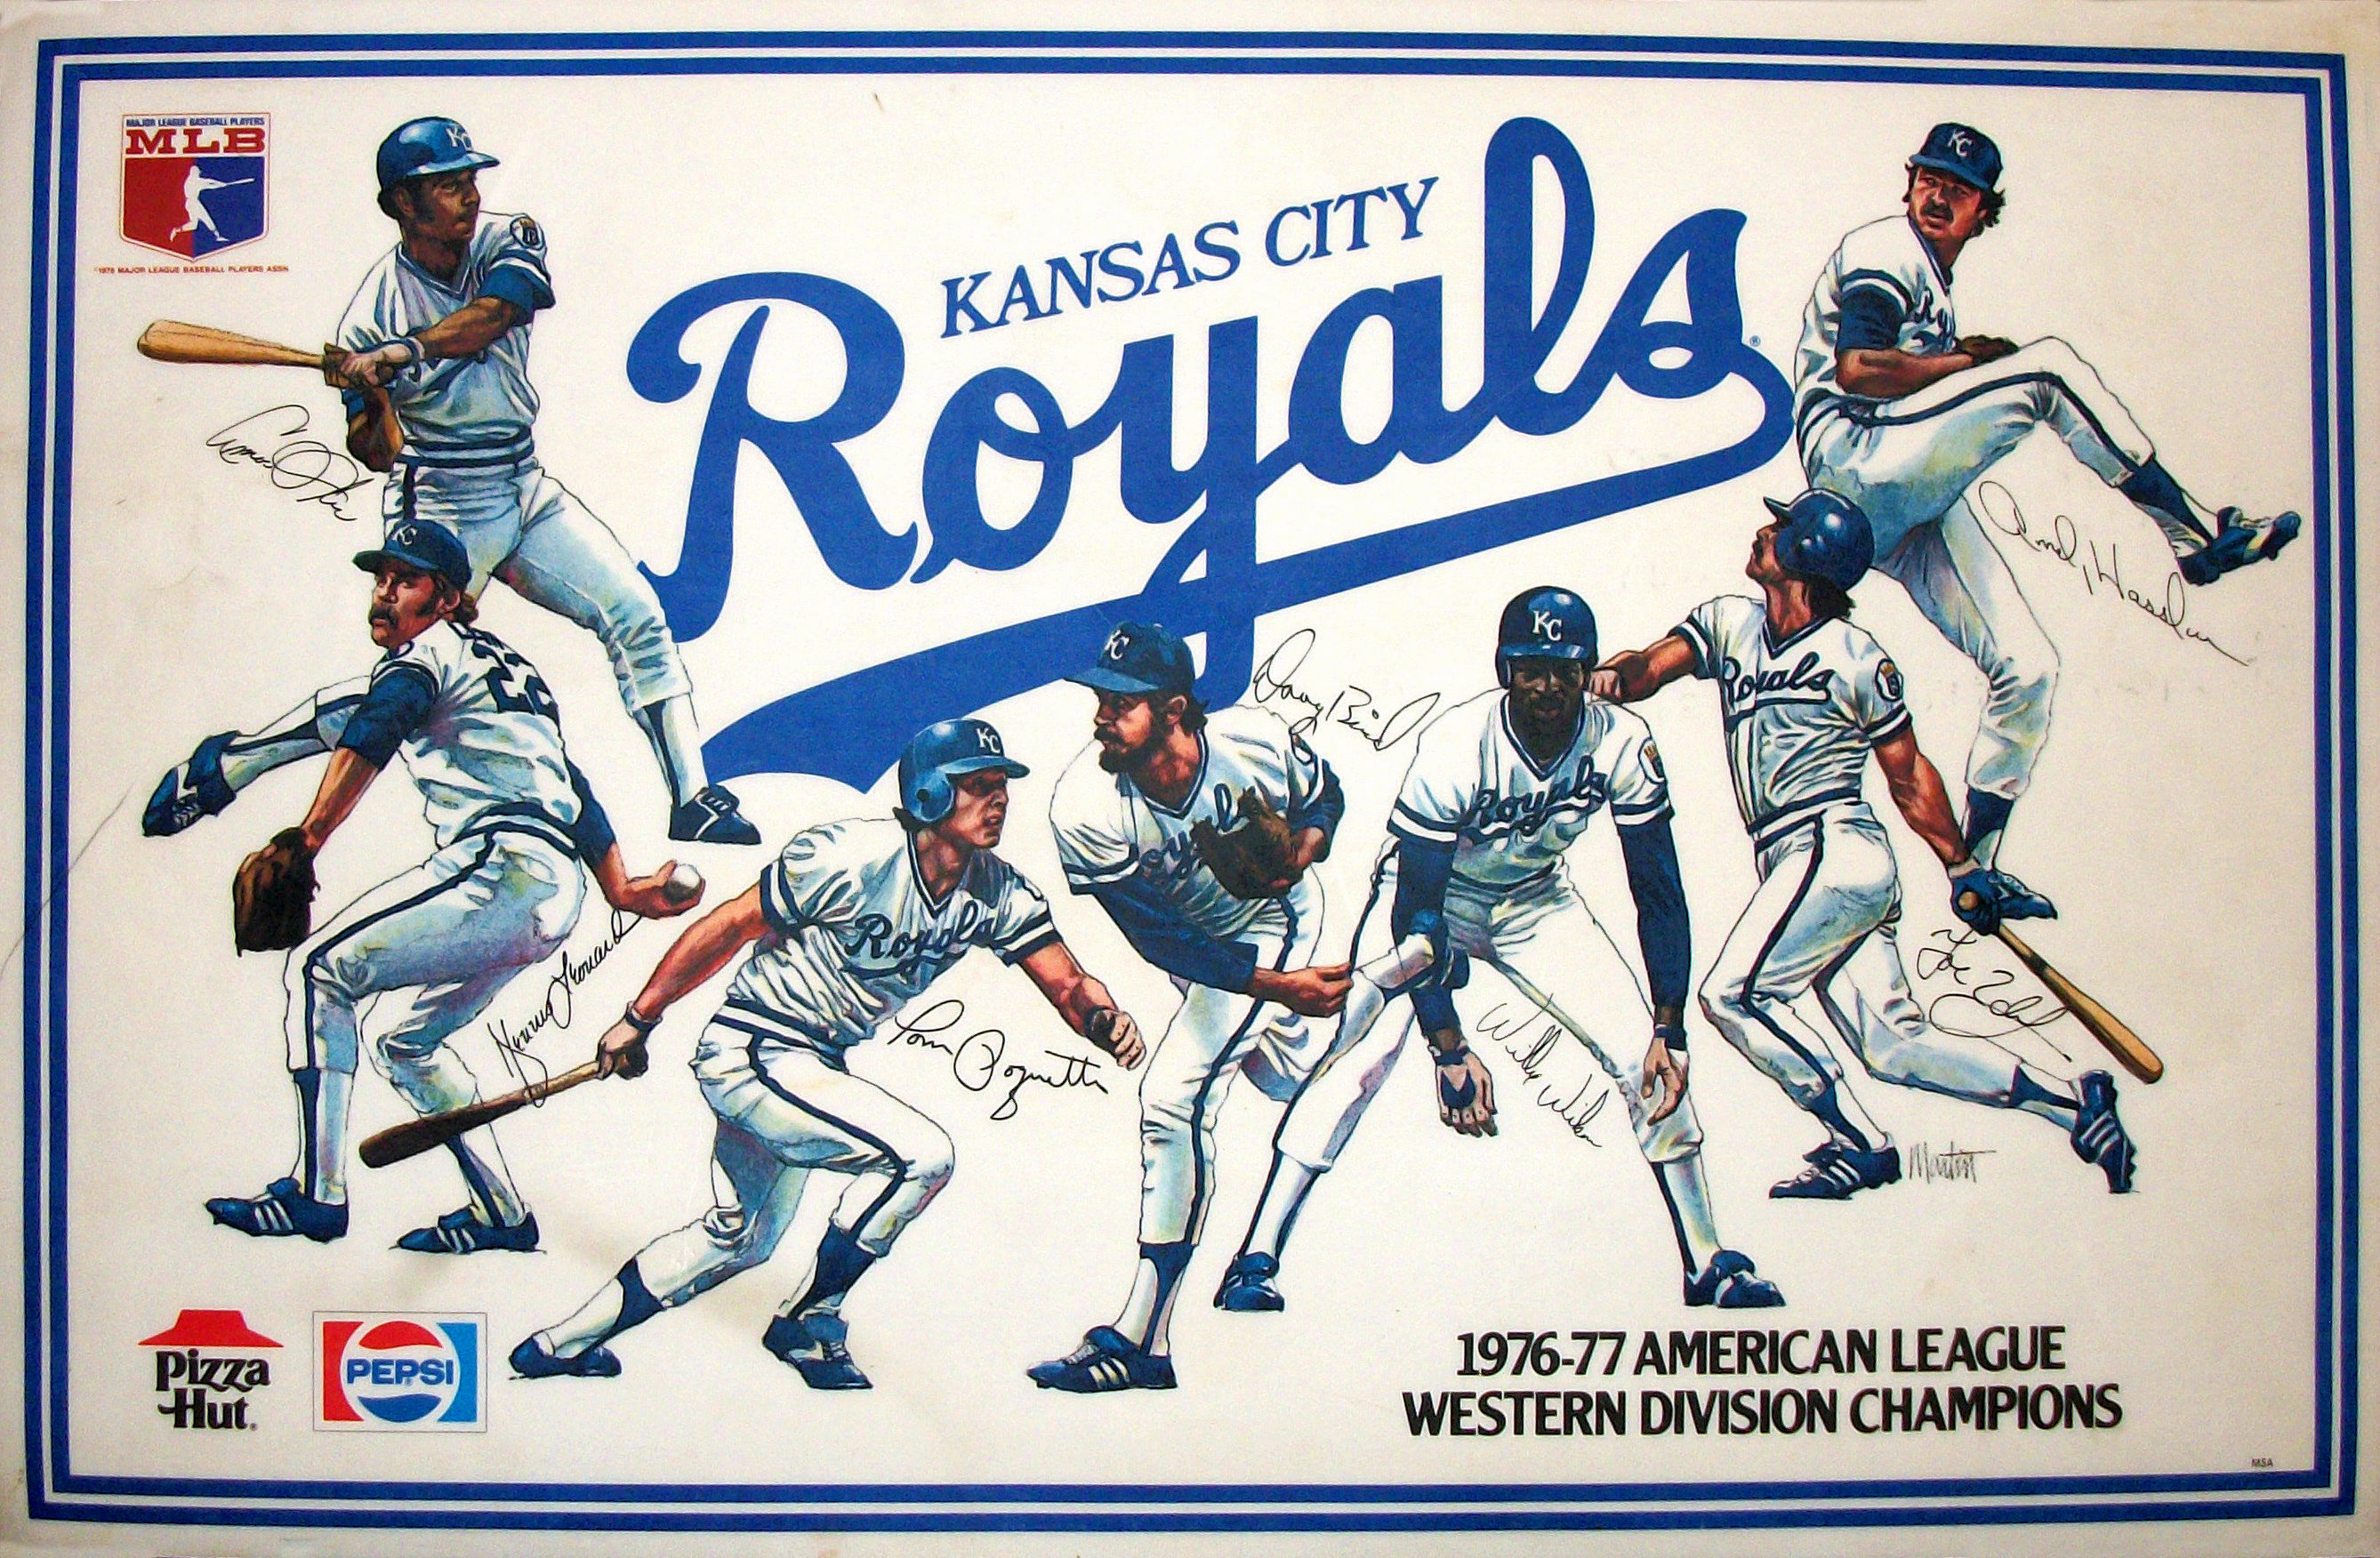 Kansas City Royals on X: Royal roots. 🇻🇪 #WallpaperWednesday  #HispanicHeritageMonth  / X